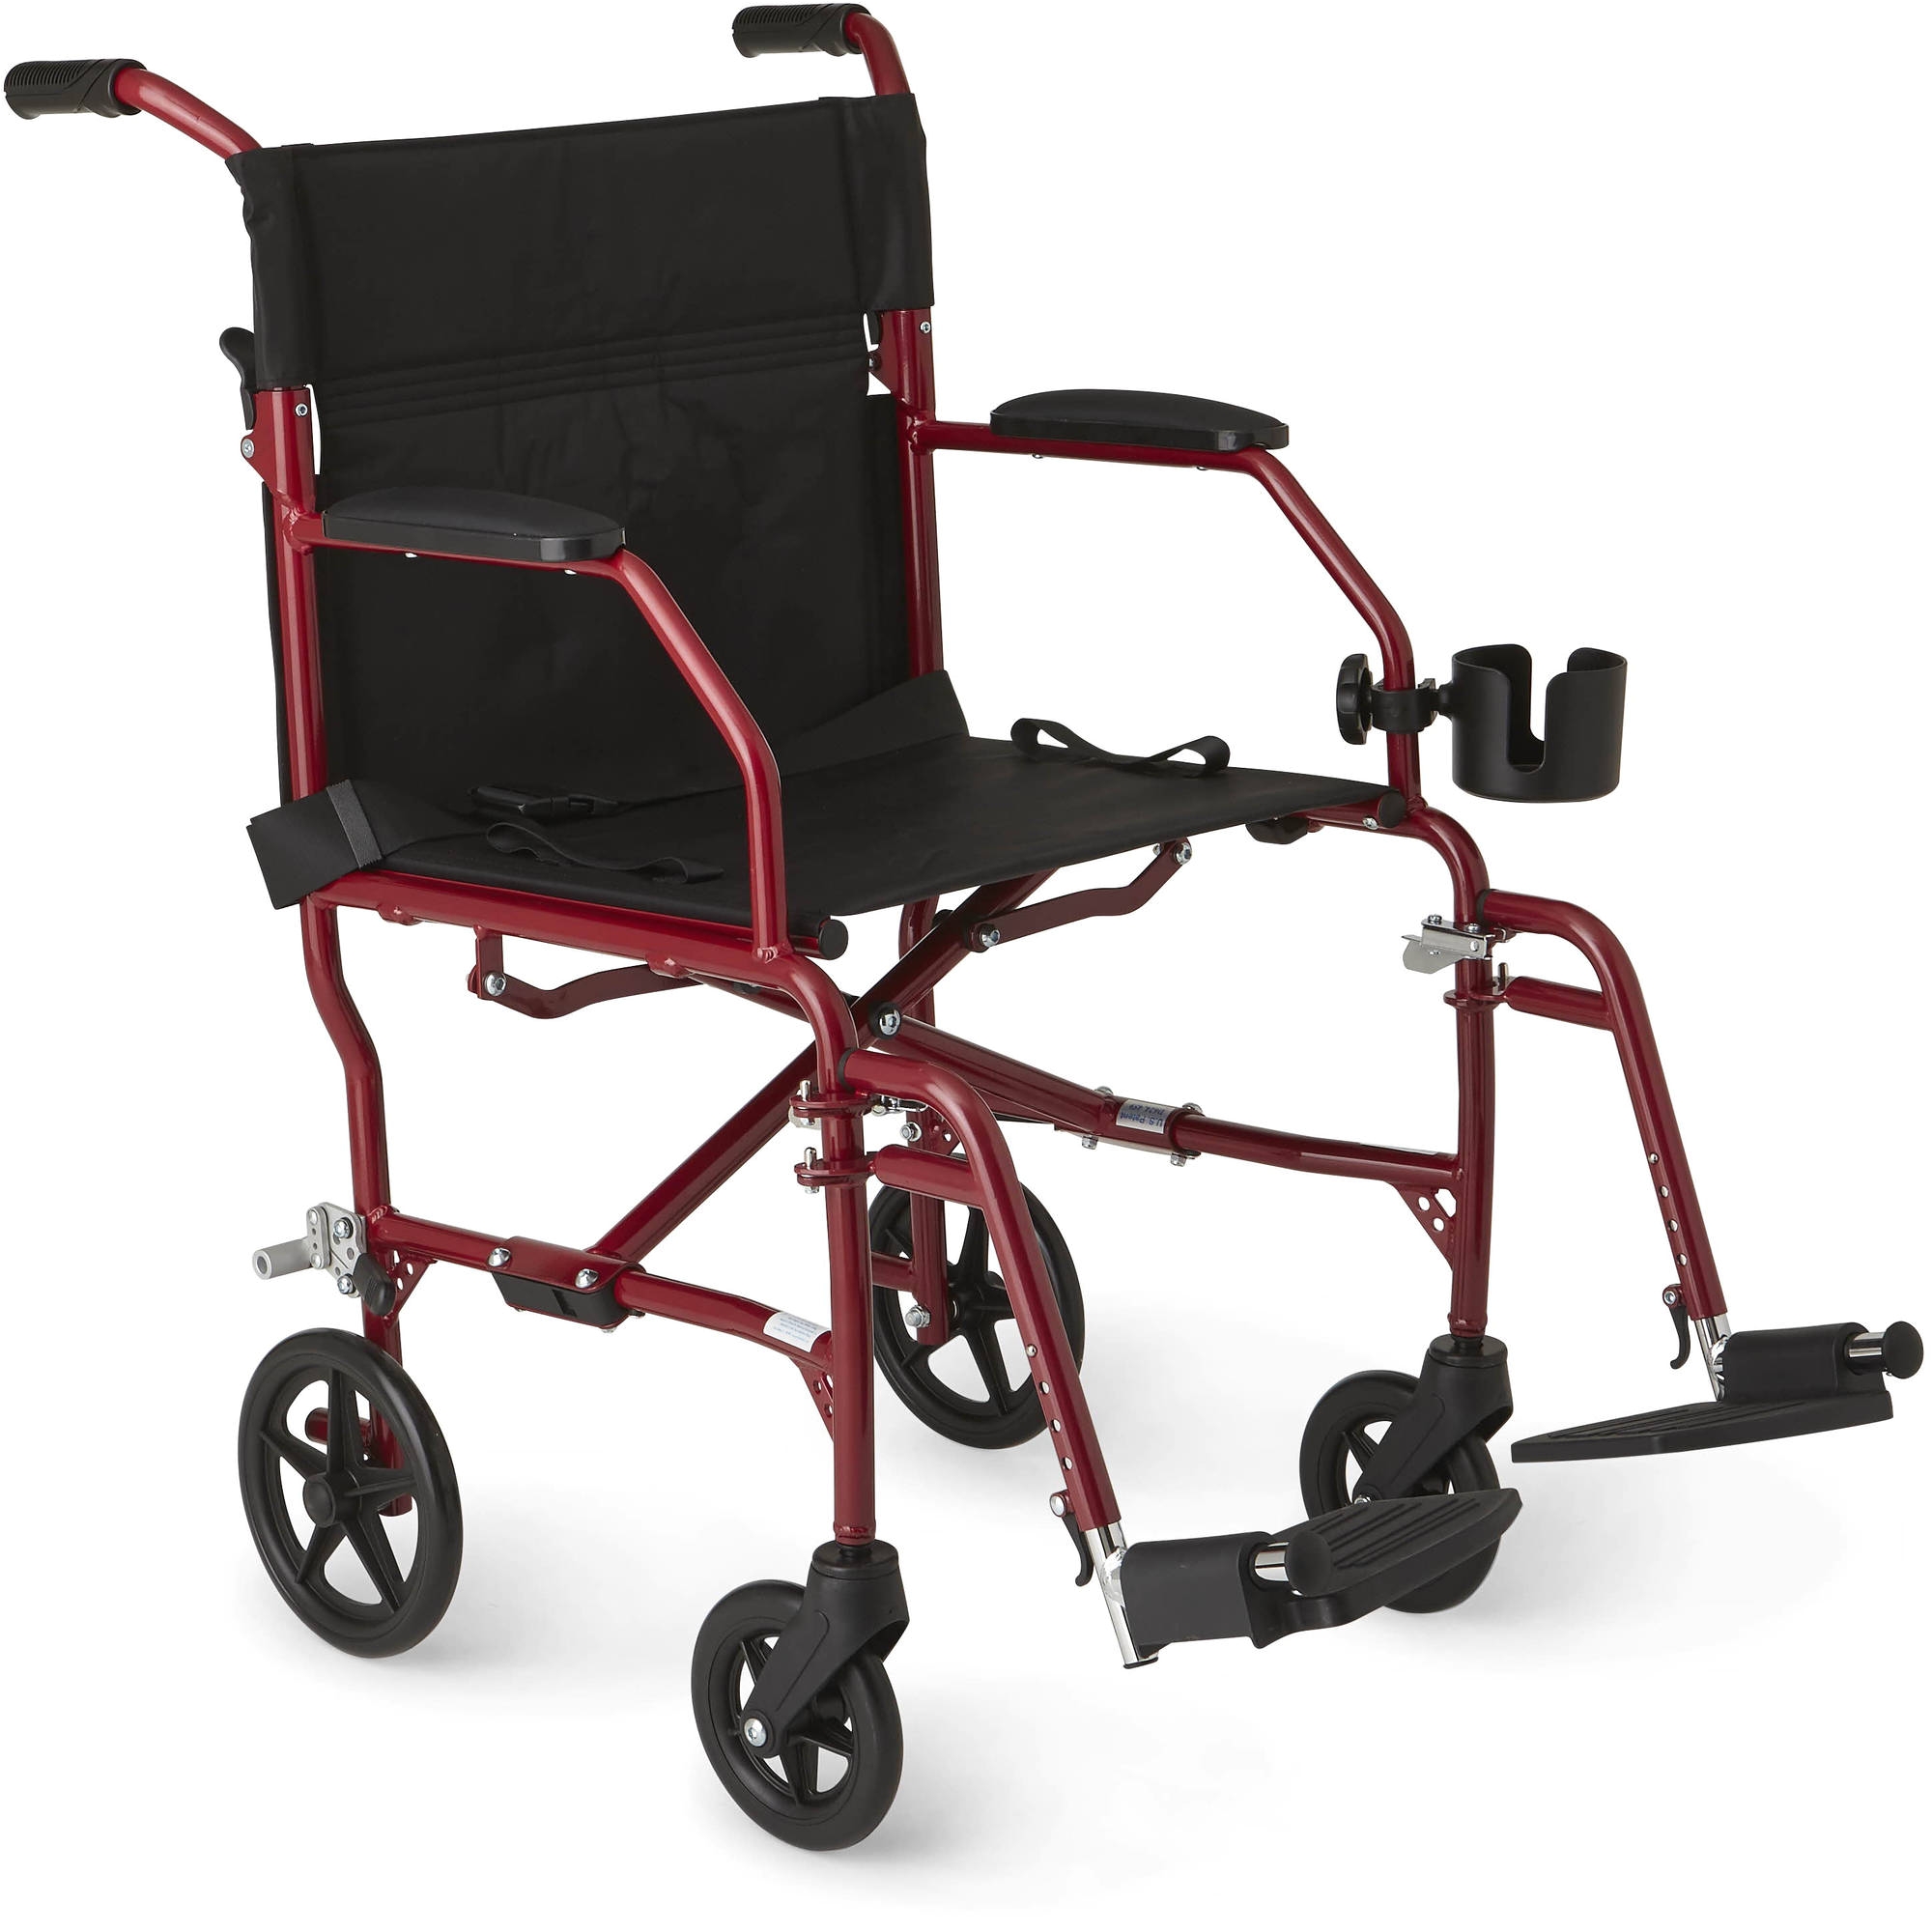 Medline Transport Chair Walmart Medline Ultralight Transport Wheelchair with 19 X 16 Seat Red